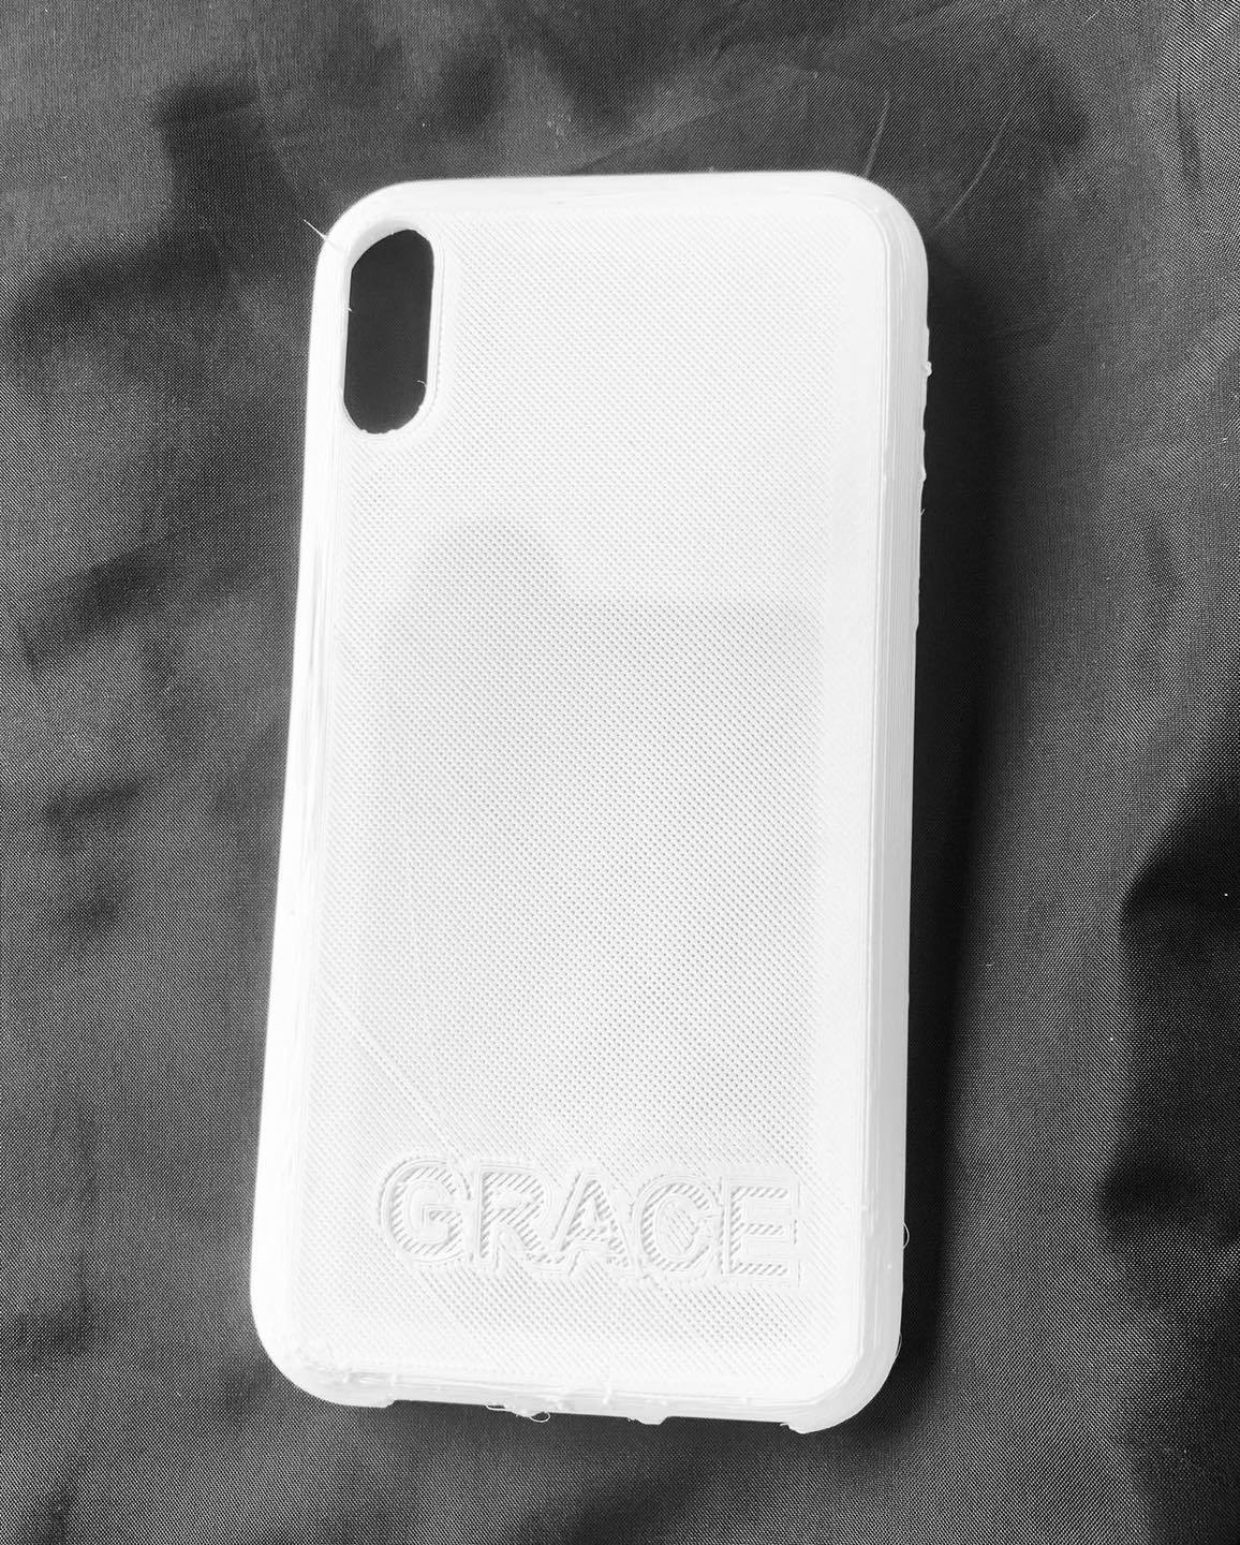 Grace ub 2